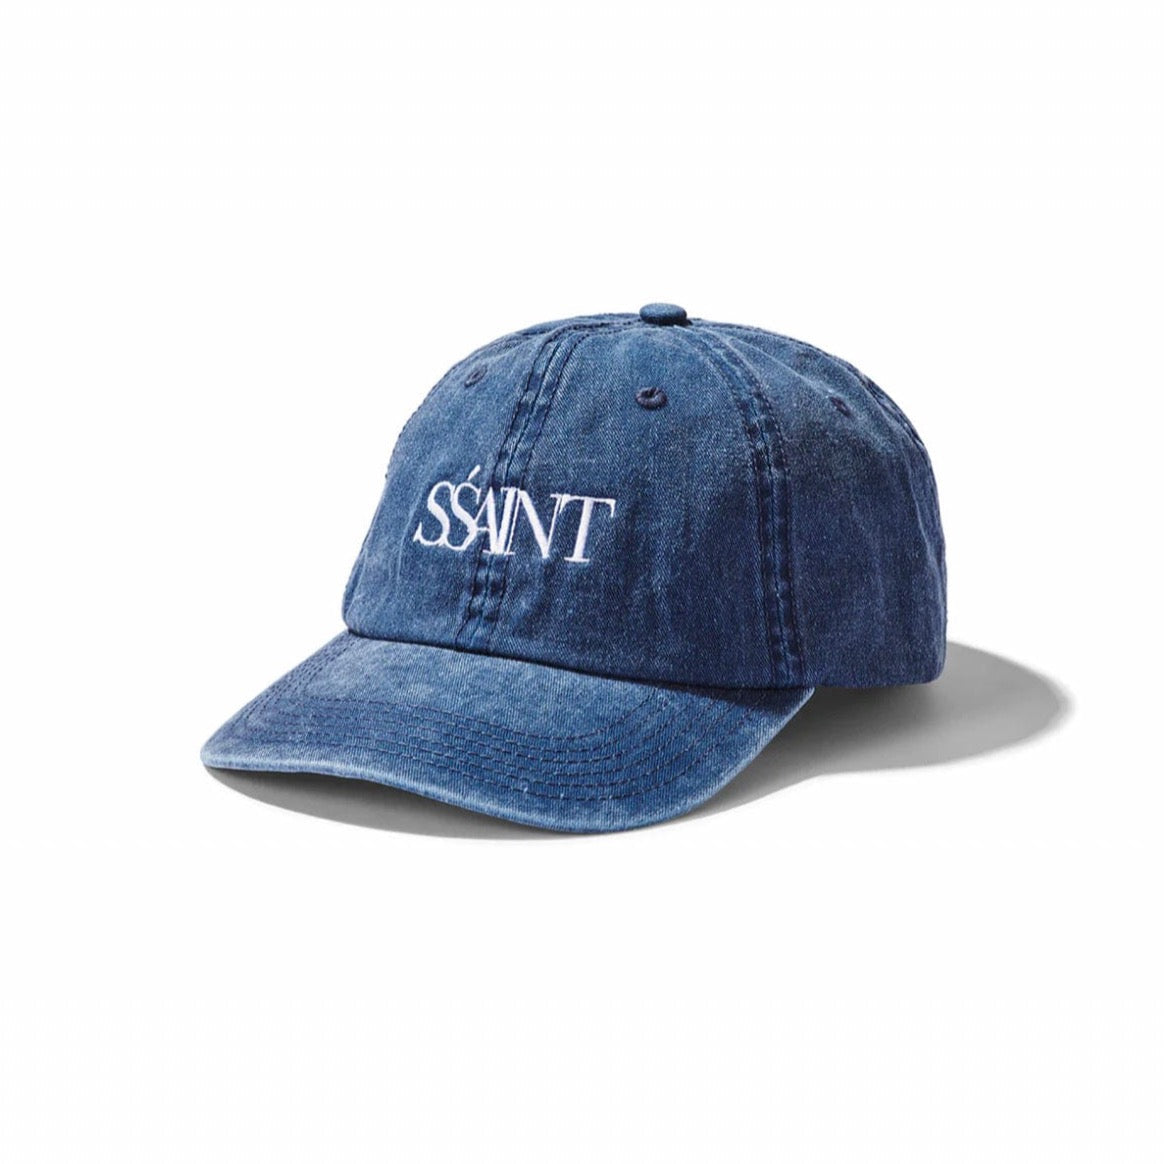 Limited Edition SSAINT Cap Blue by Ssaint